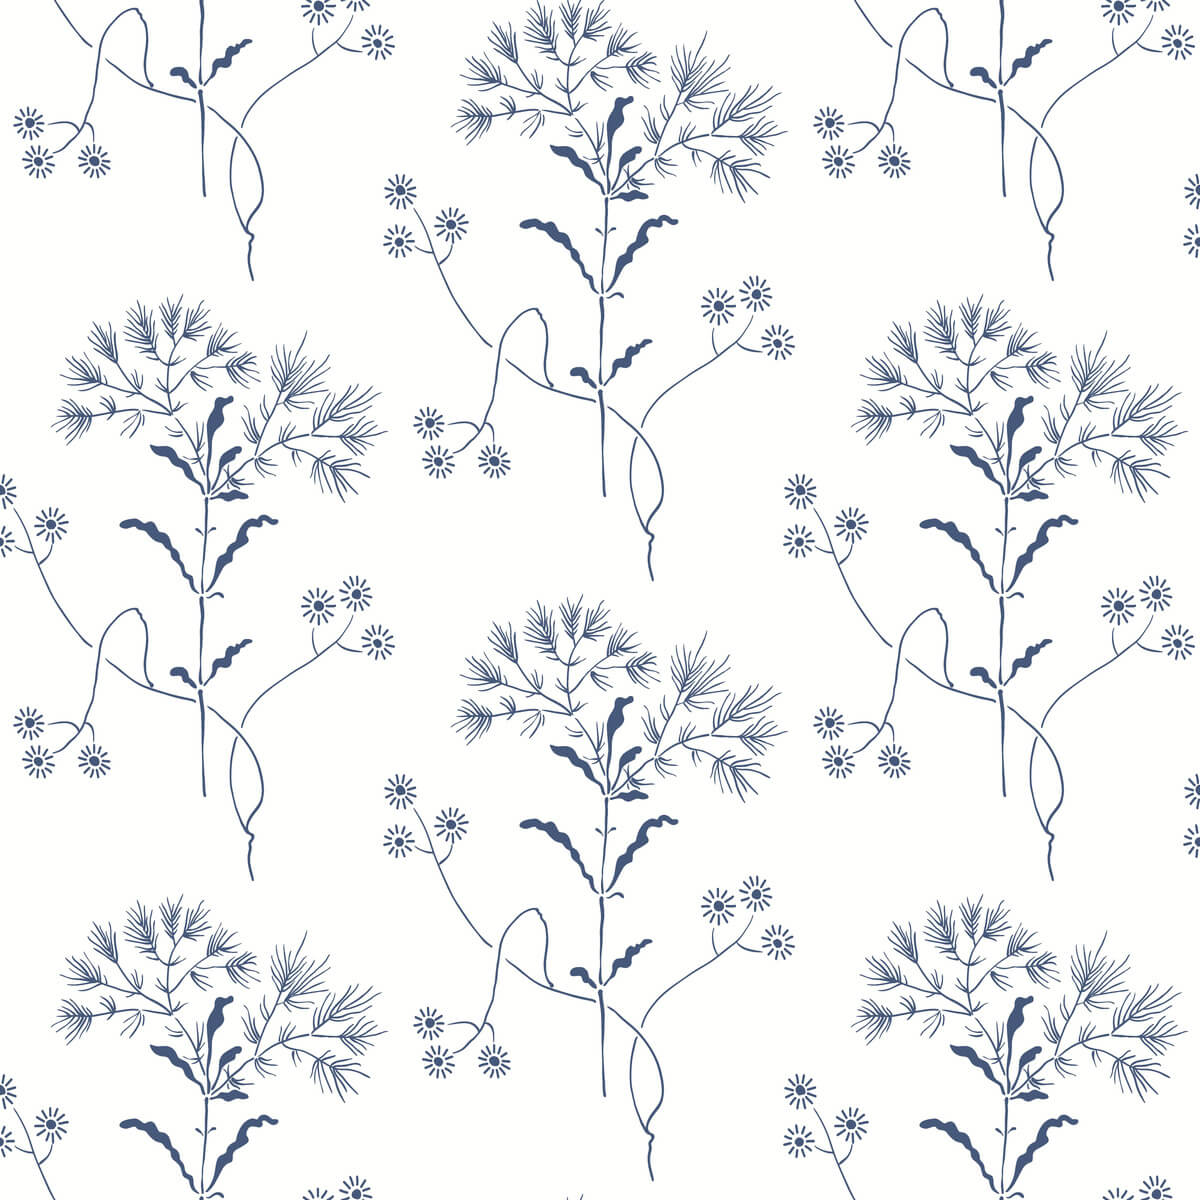 Magnolia Home Wildflower Peel & Stick Wallpaper - Navy Blue